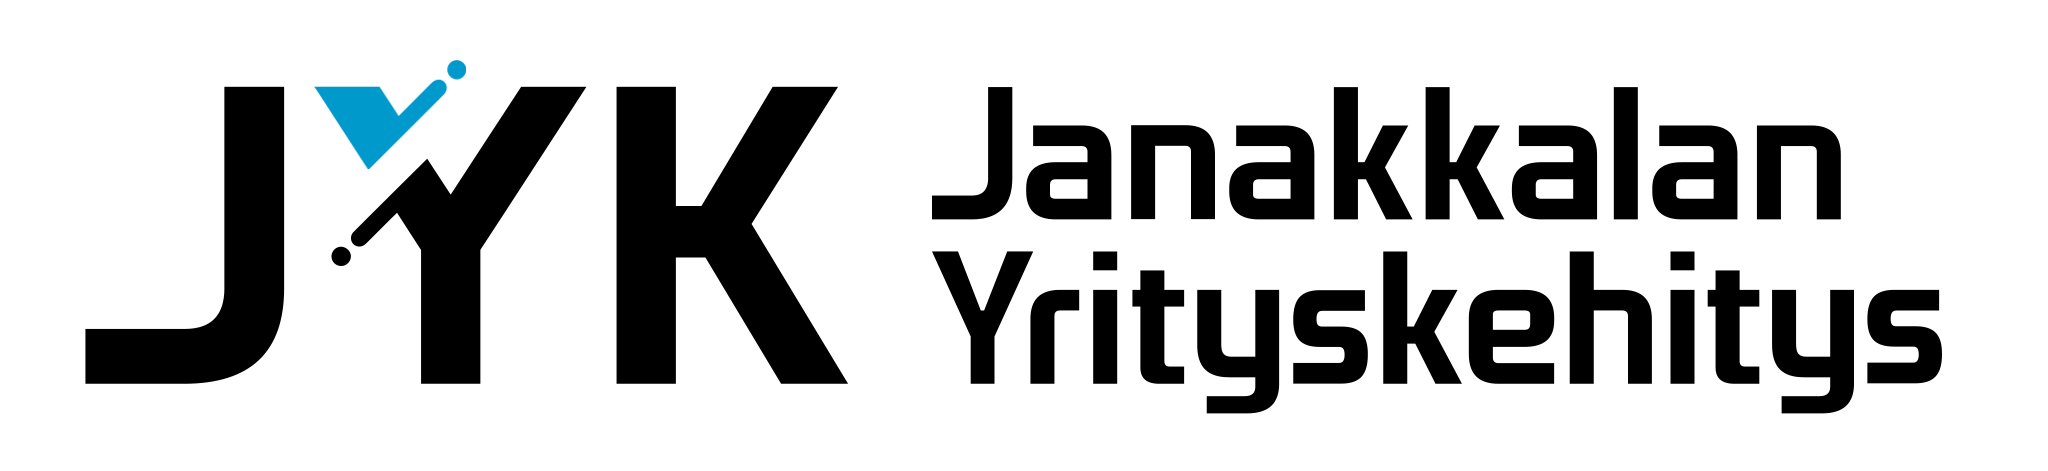 Janakkalan Yrityskehitys Oy logo